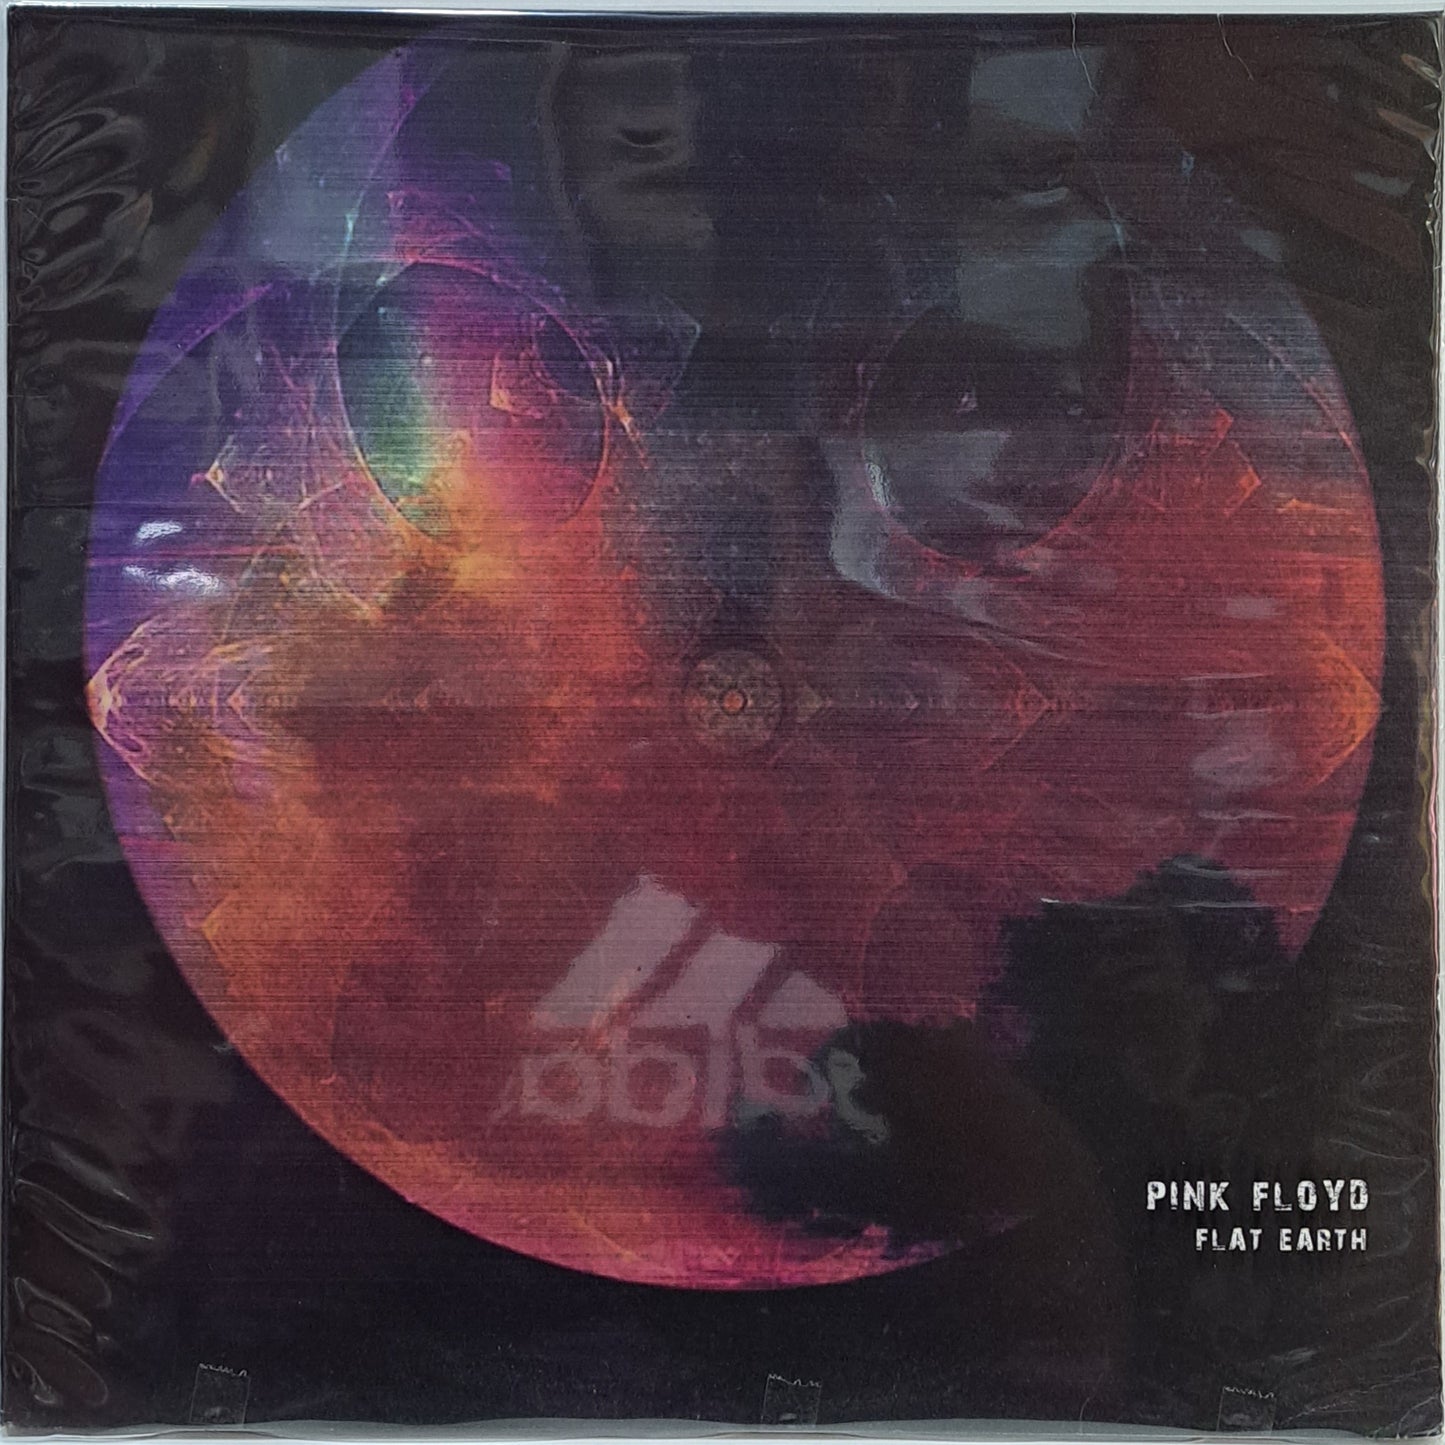 PINK FLOYD - FLAT EARTH   LP